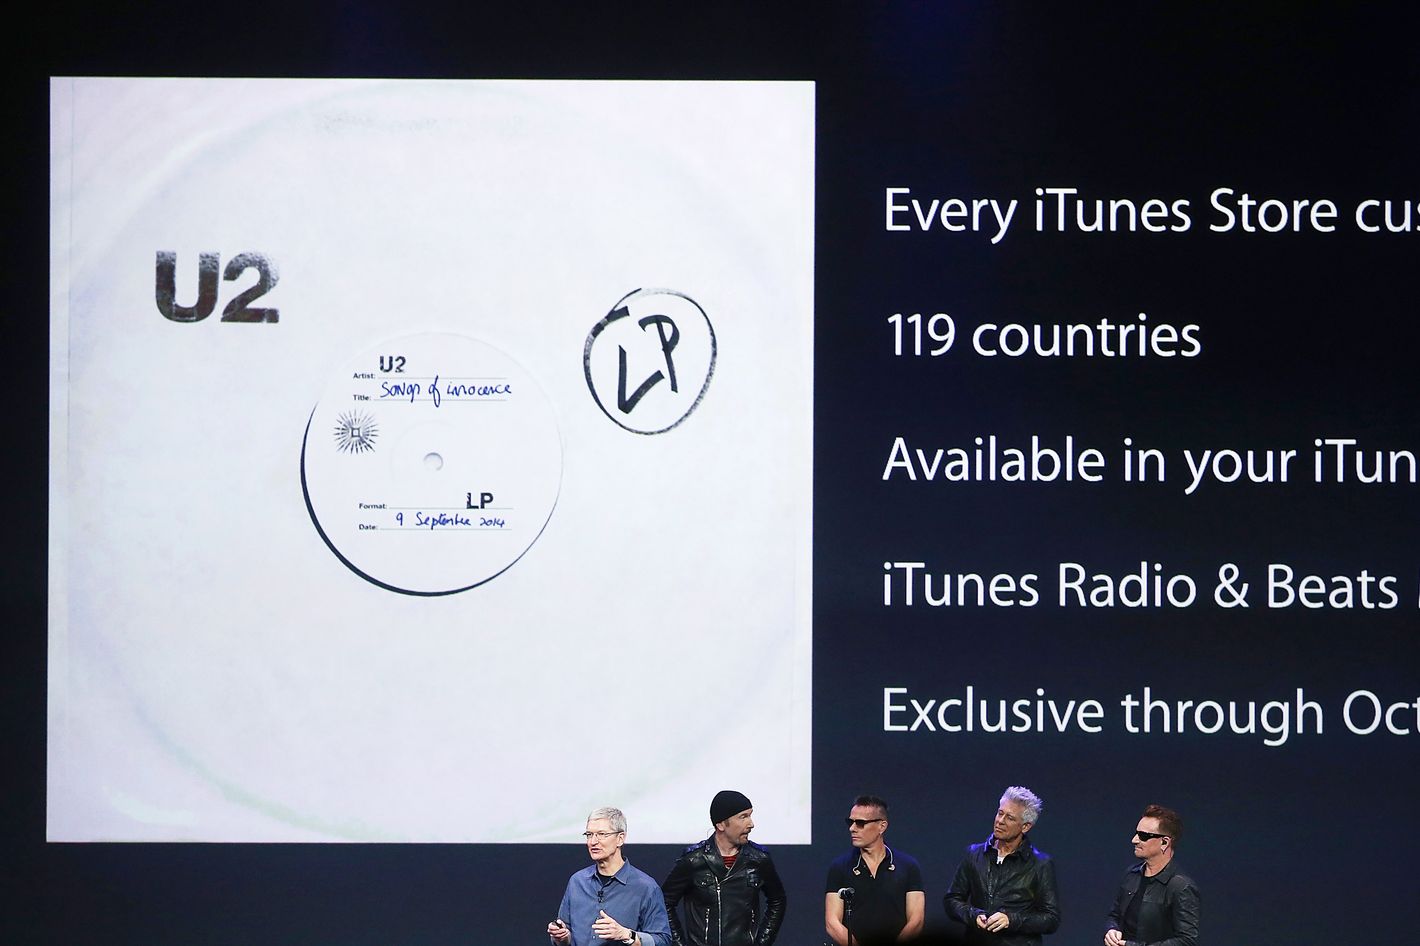 Pop - Album by U2 - Apple Music